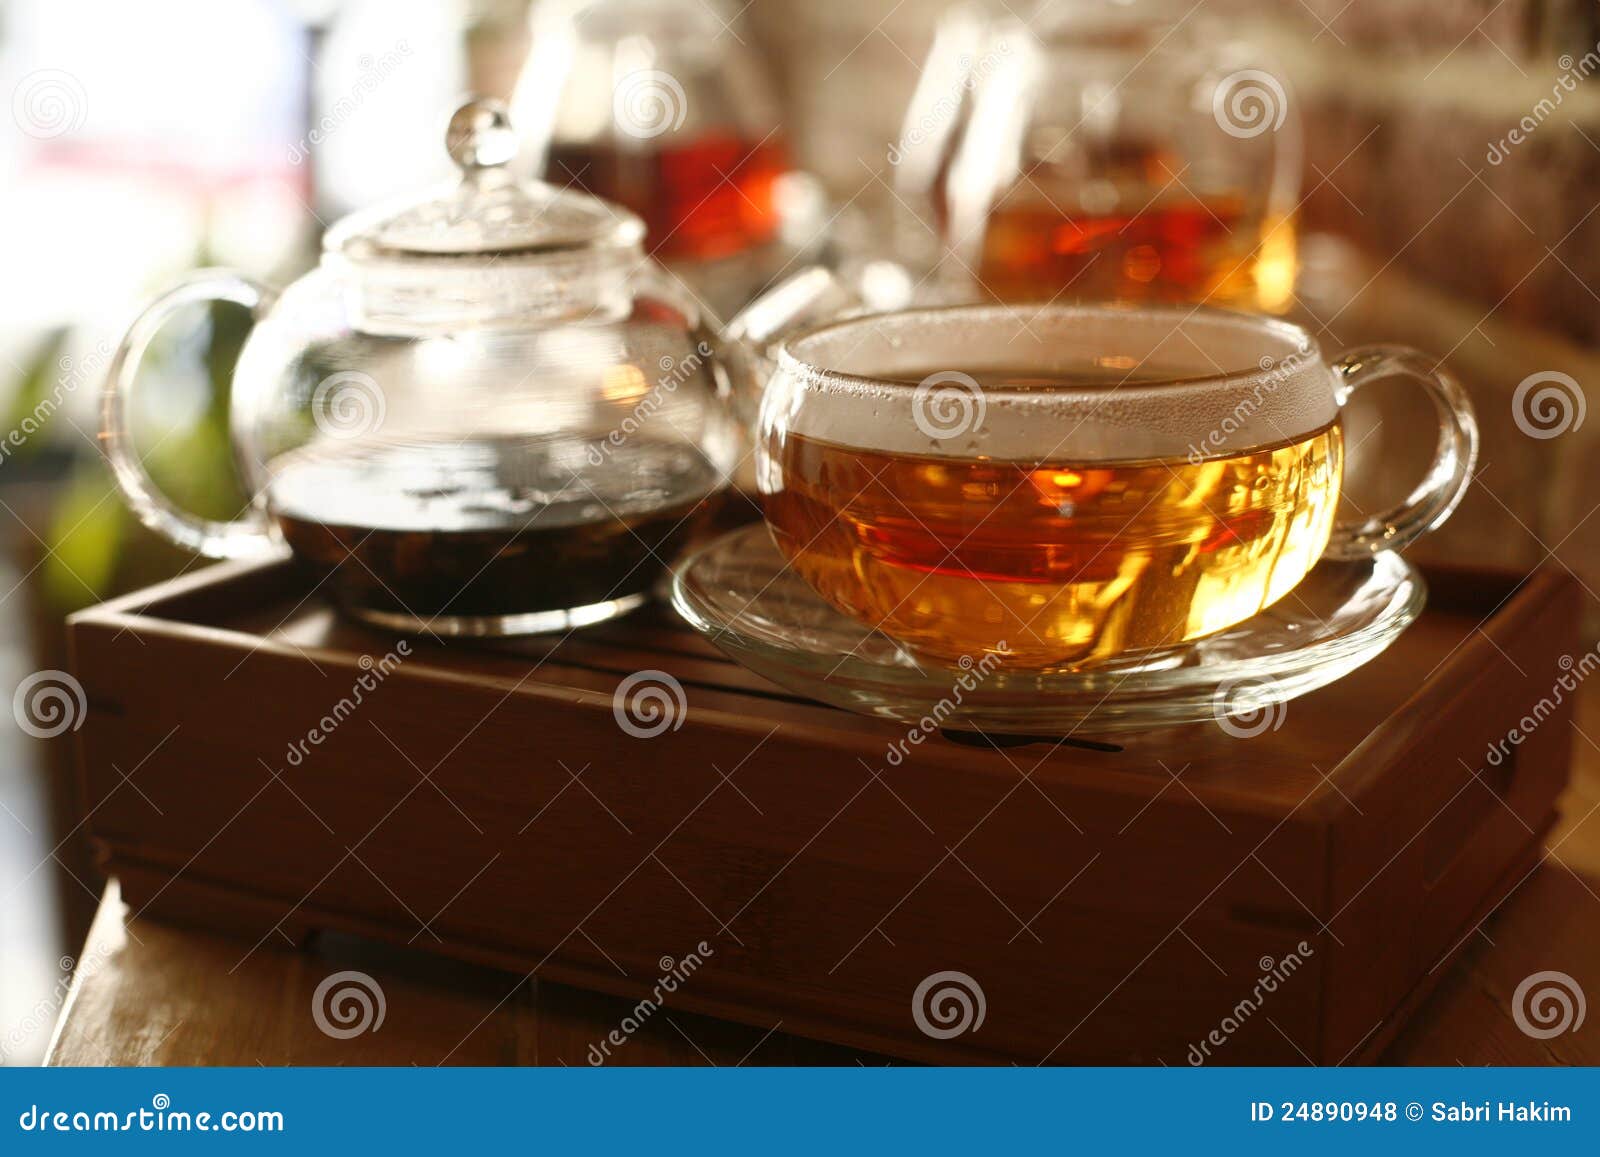 tea in glass teacup